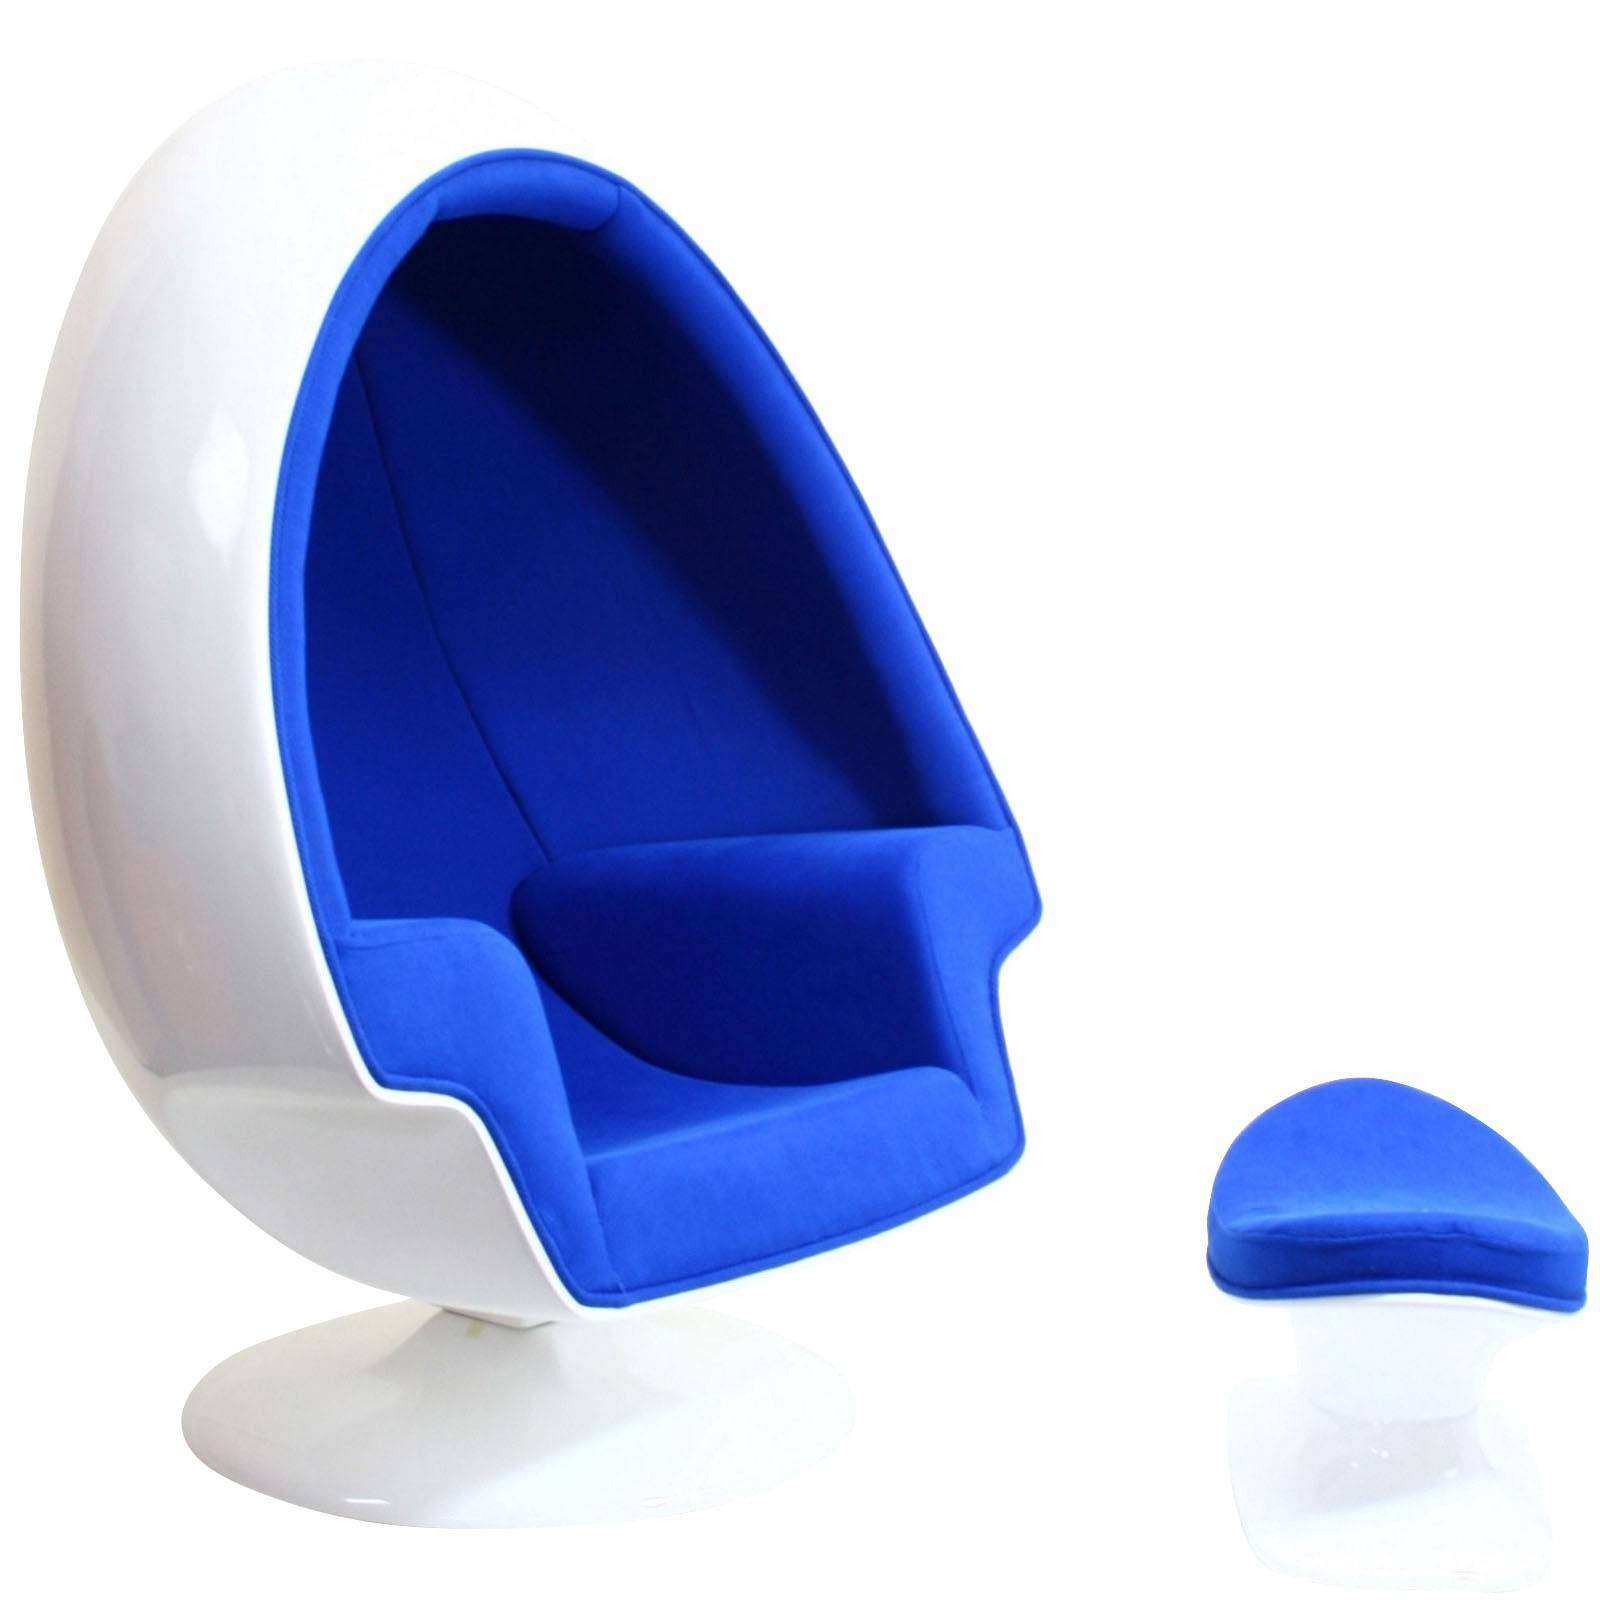 Aarnio Style Alpha Shell Egg Chair & Ottoman Replica